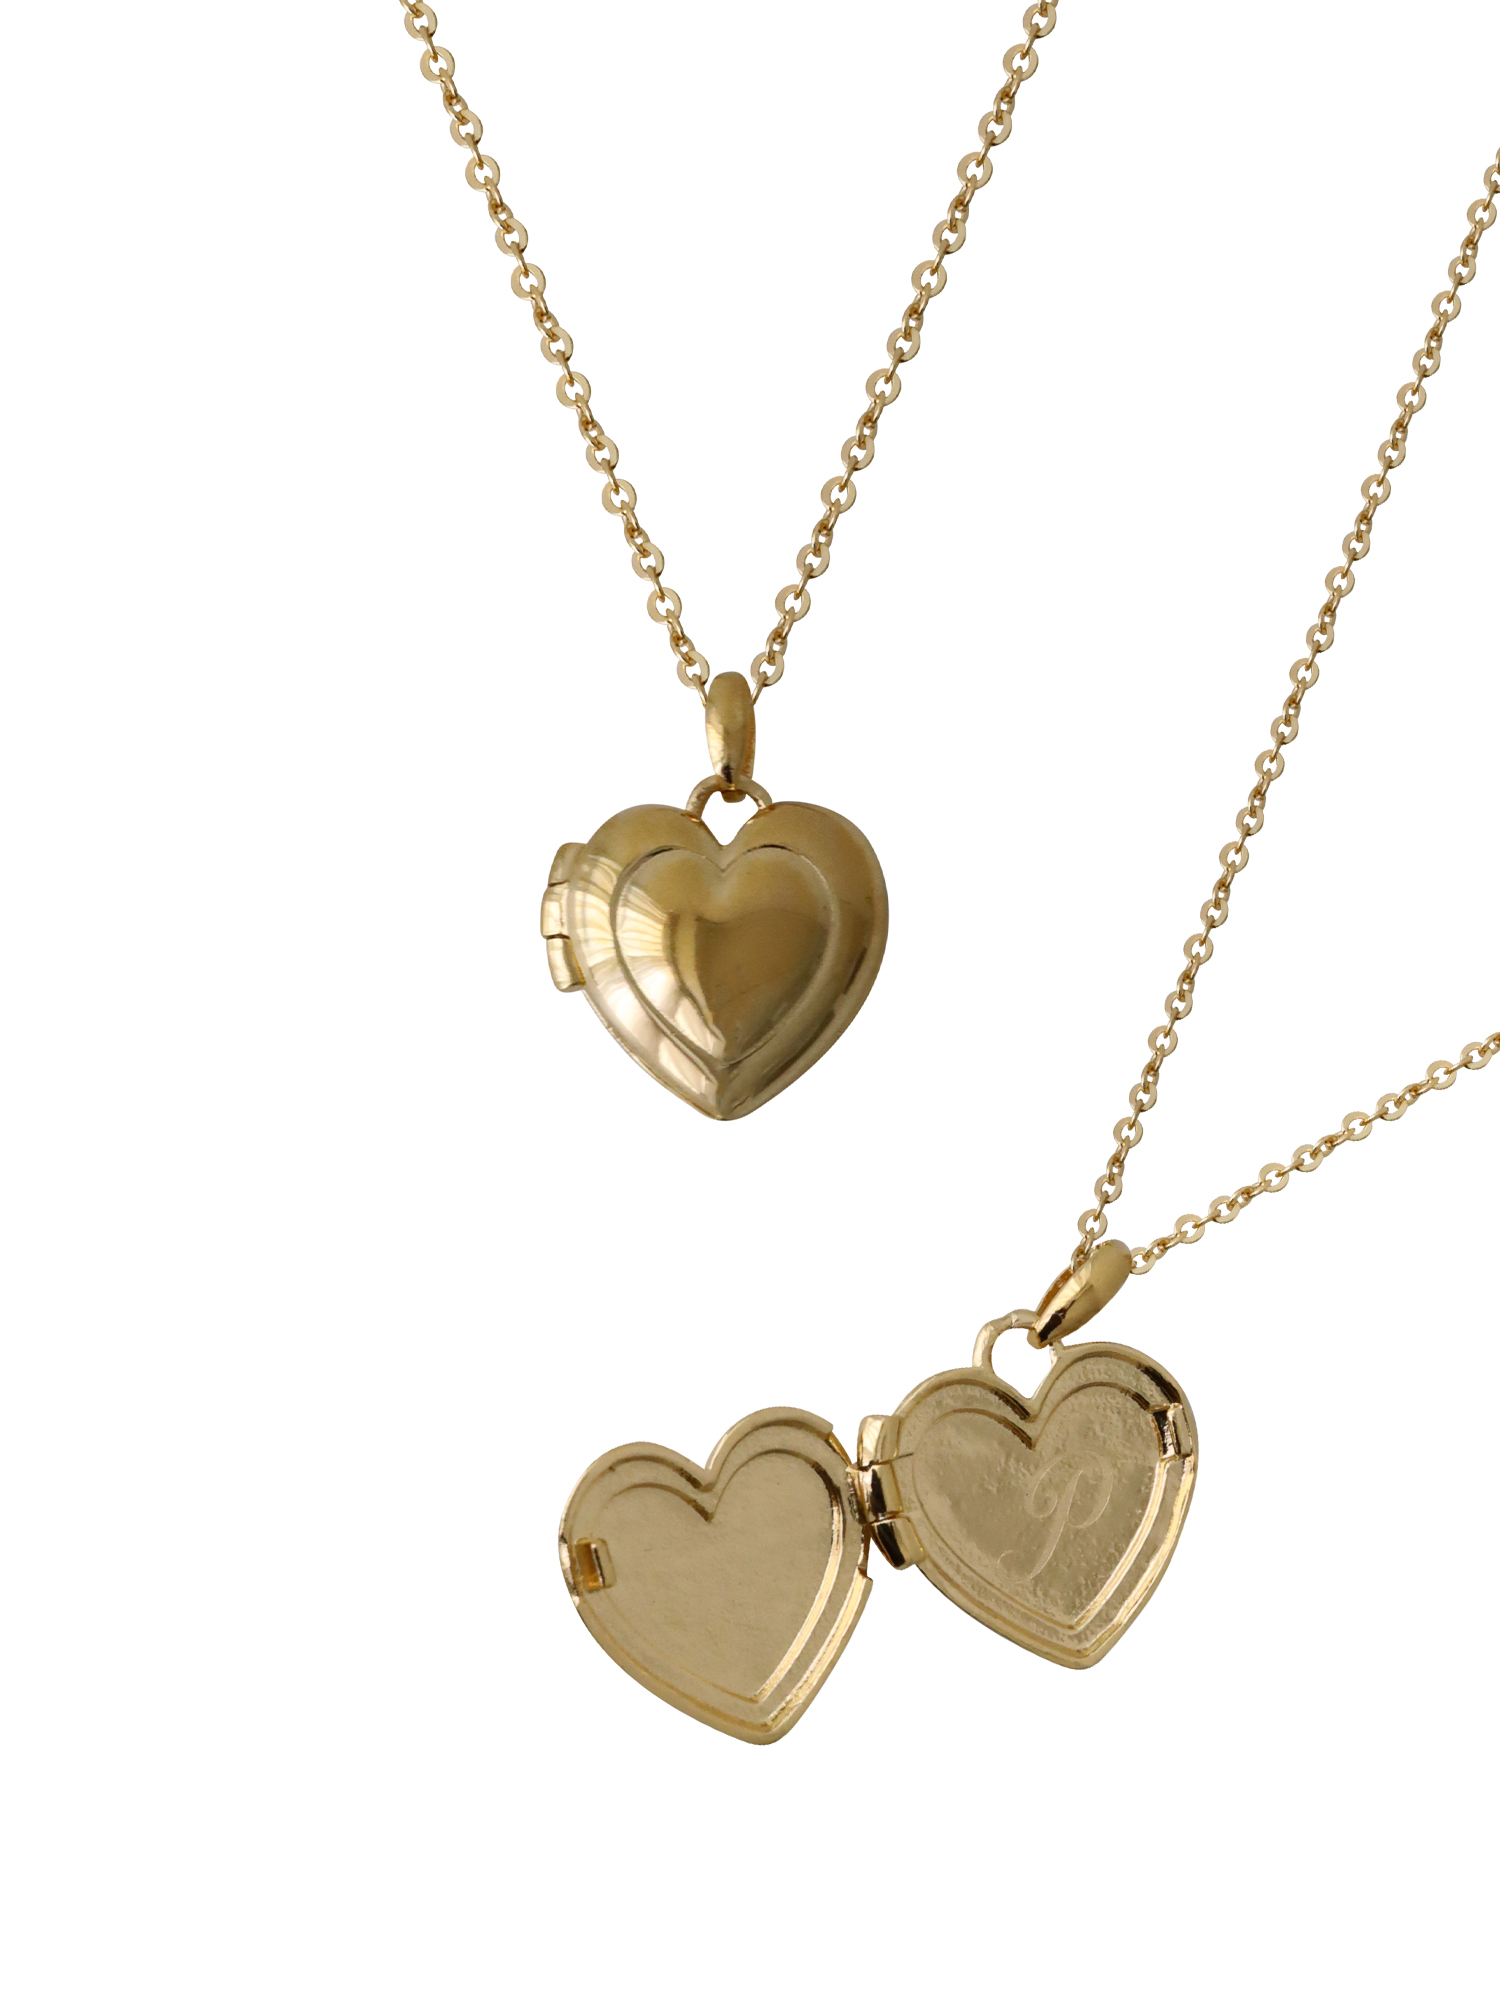 Love myself Necklace ( Gold Vermeil / Polished )